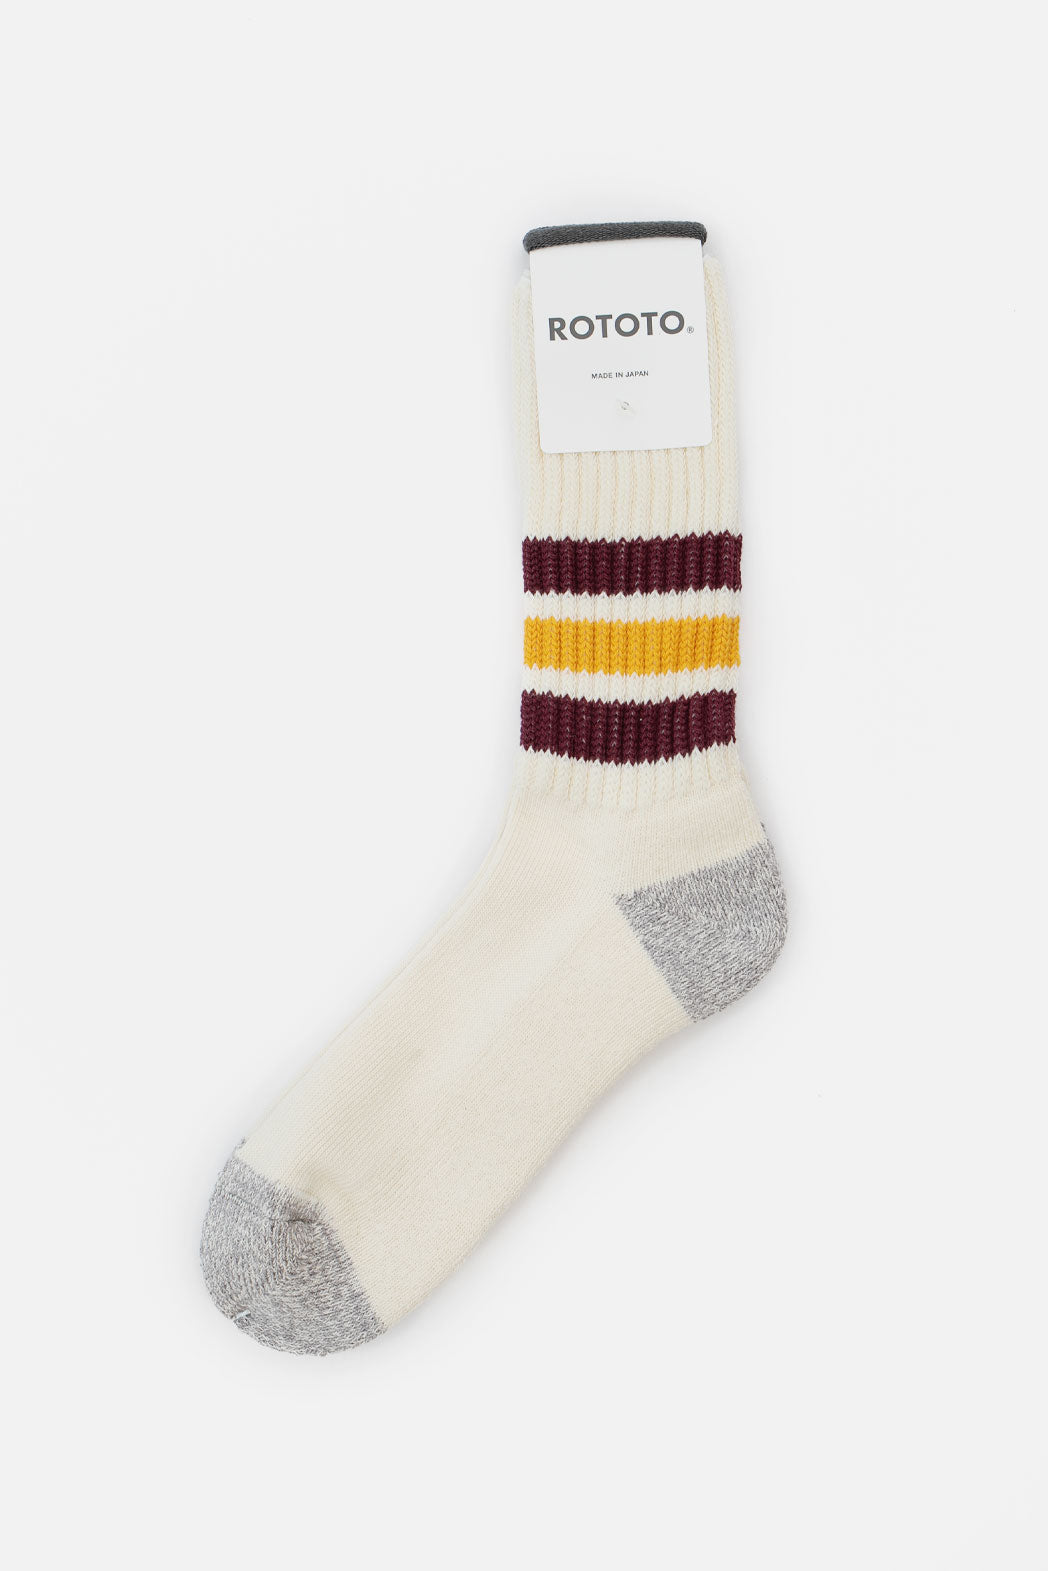 Rototo Coarse Ribbed Old School Socks / Bordeaux Yellow